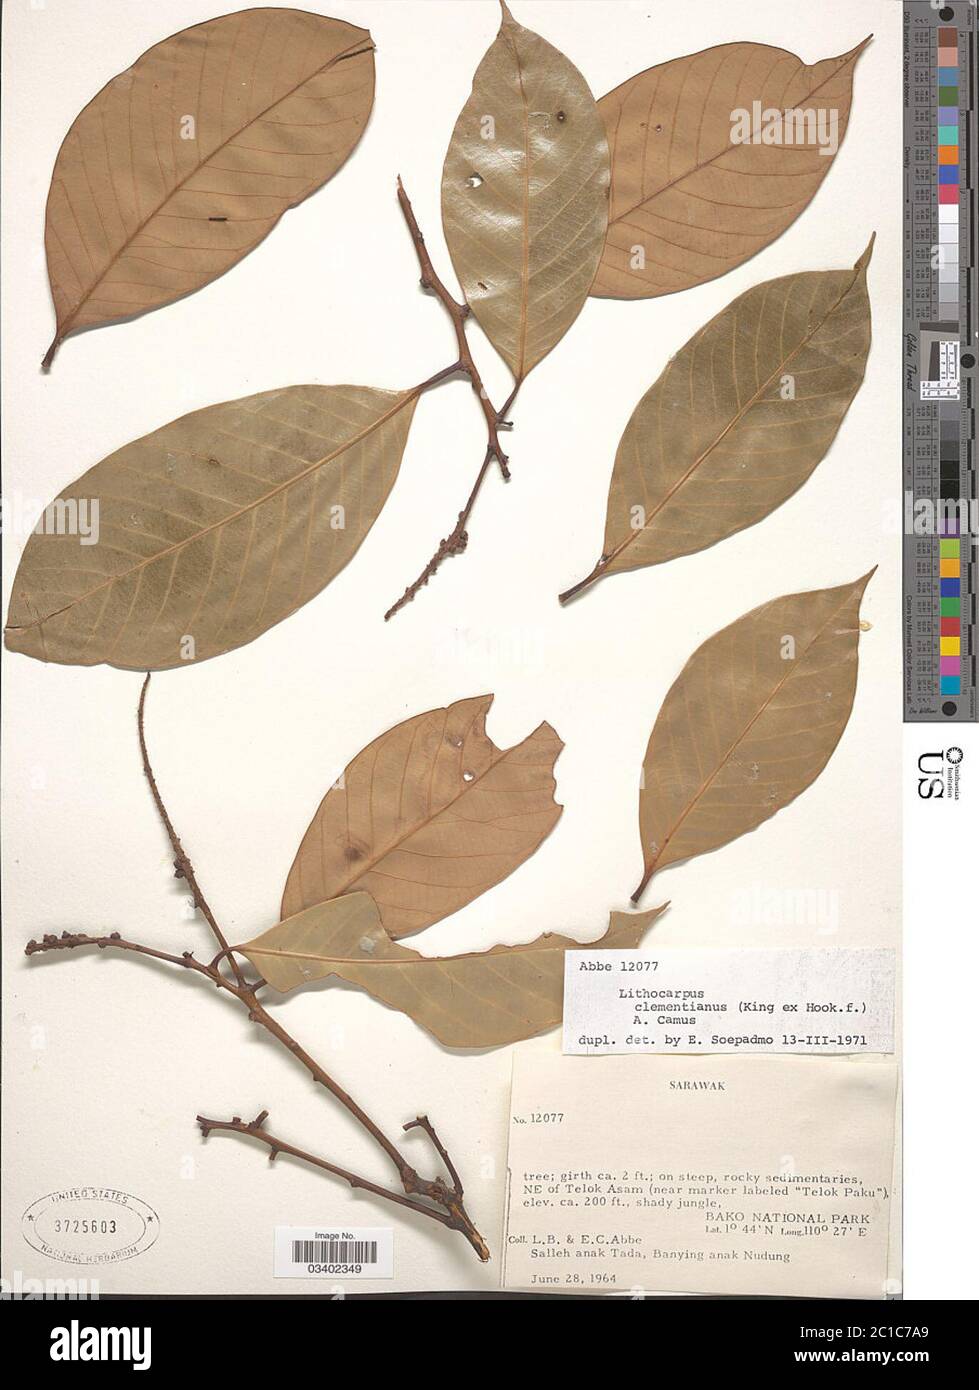 Lithocarpus clementianus King ex Hook f A Camus Lithocarpus clementianus King ex Hook f A Camus. Stock Photo